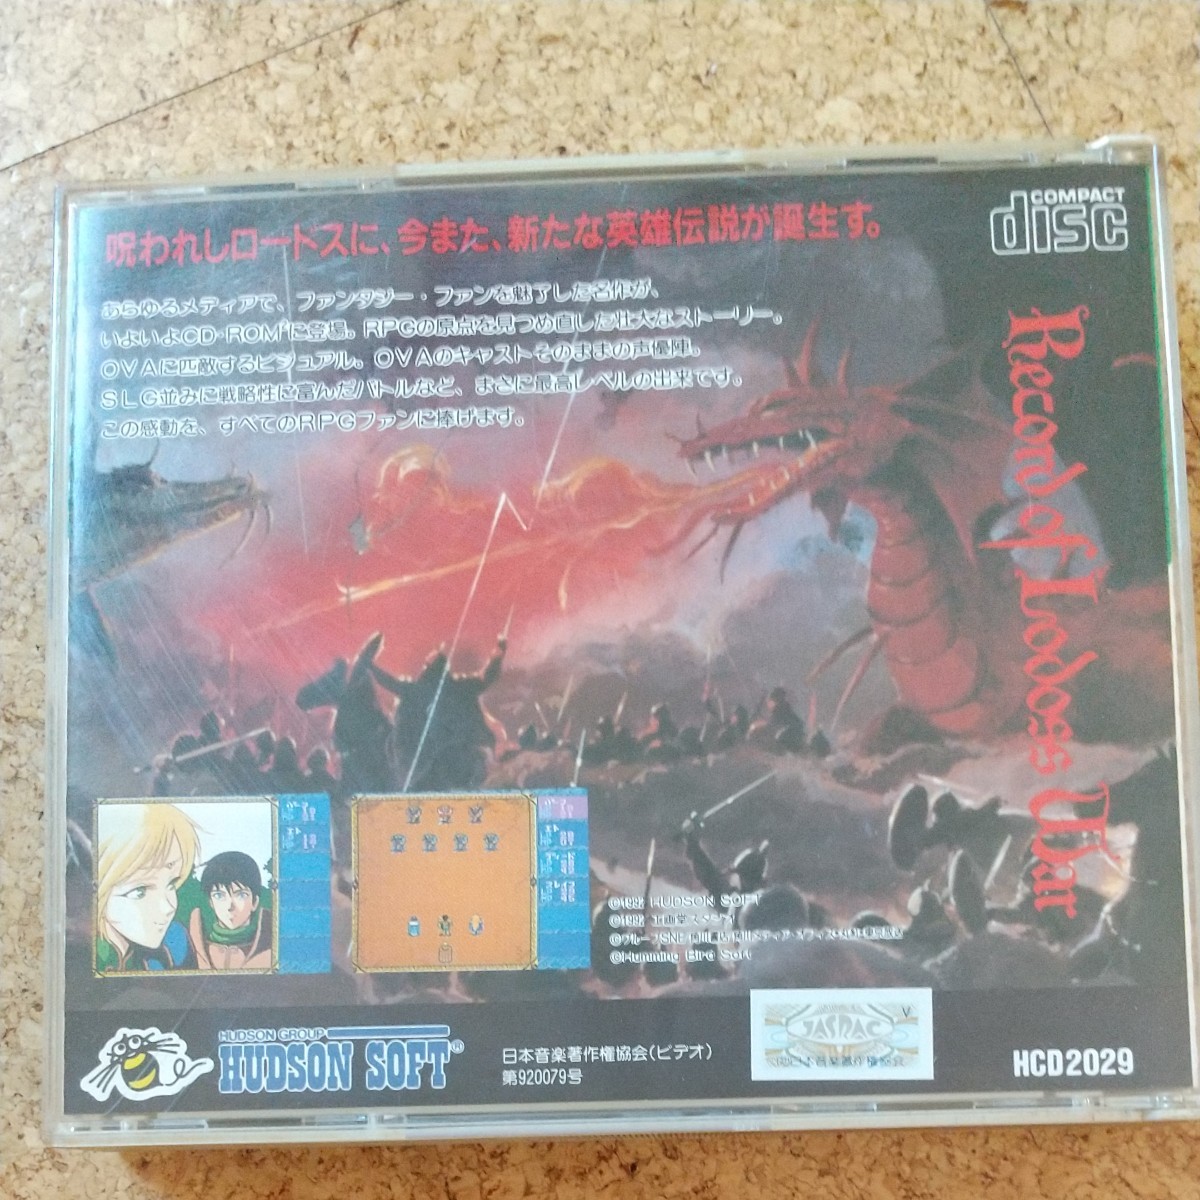 PCエンジン CD-ROM2 ロードス島戦記